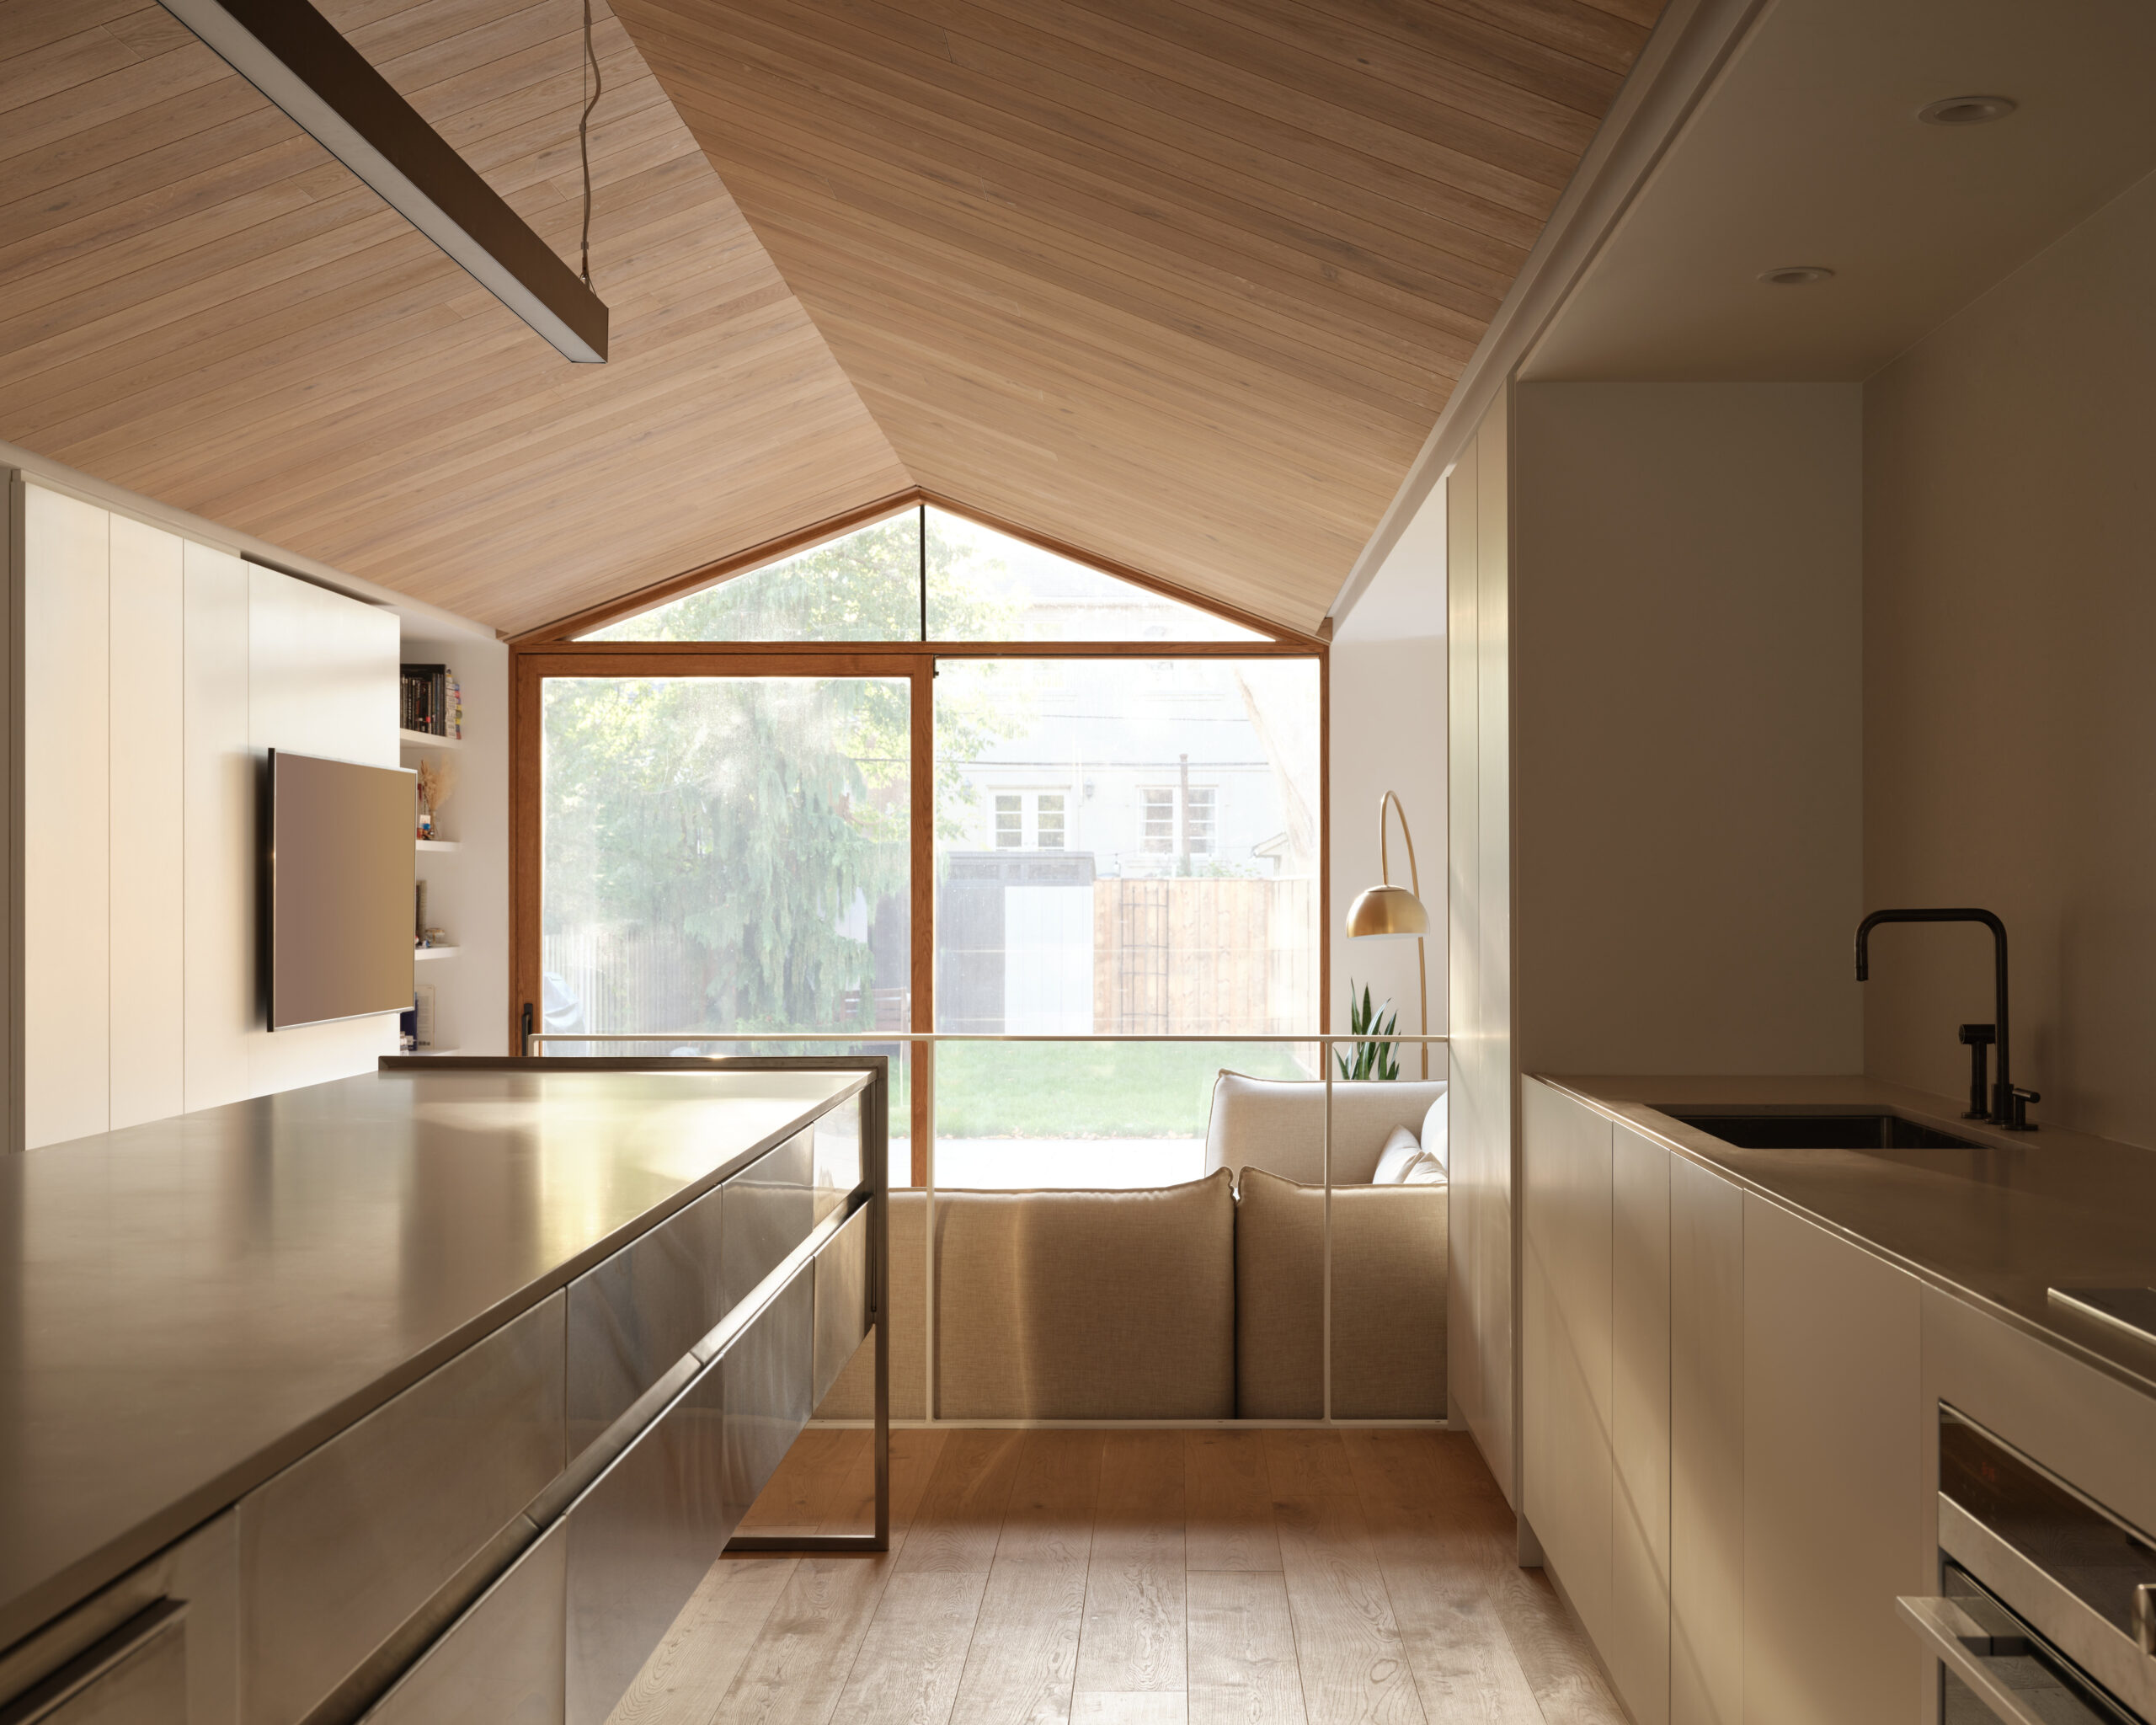 Everden kitchen by StudioAC Architects